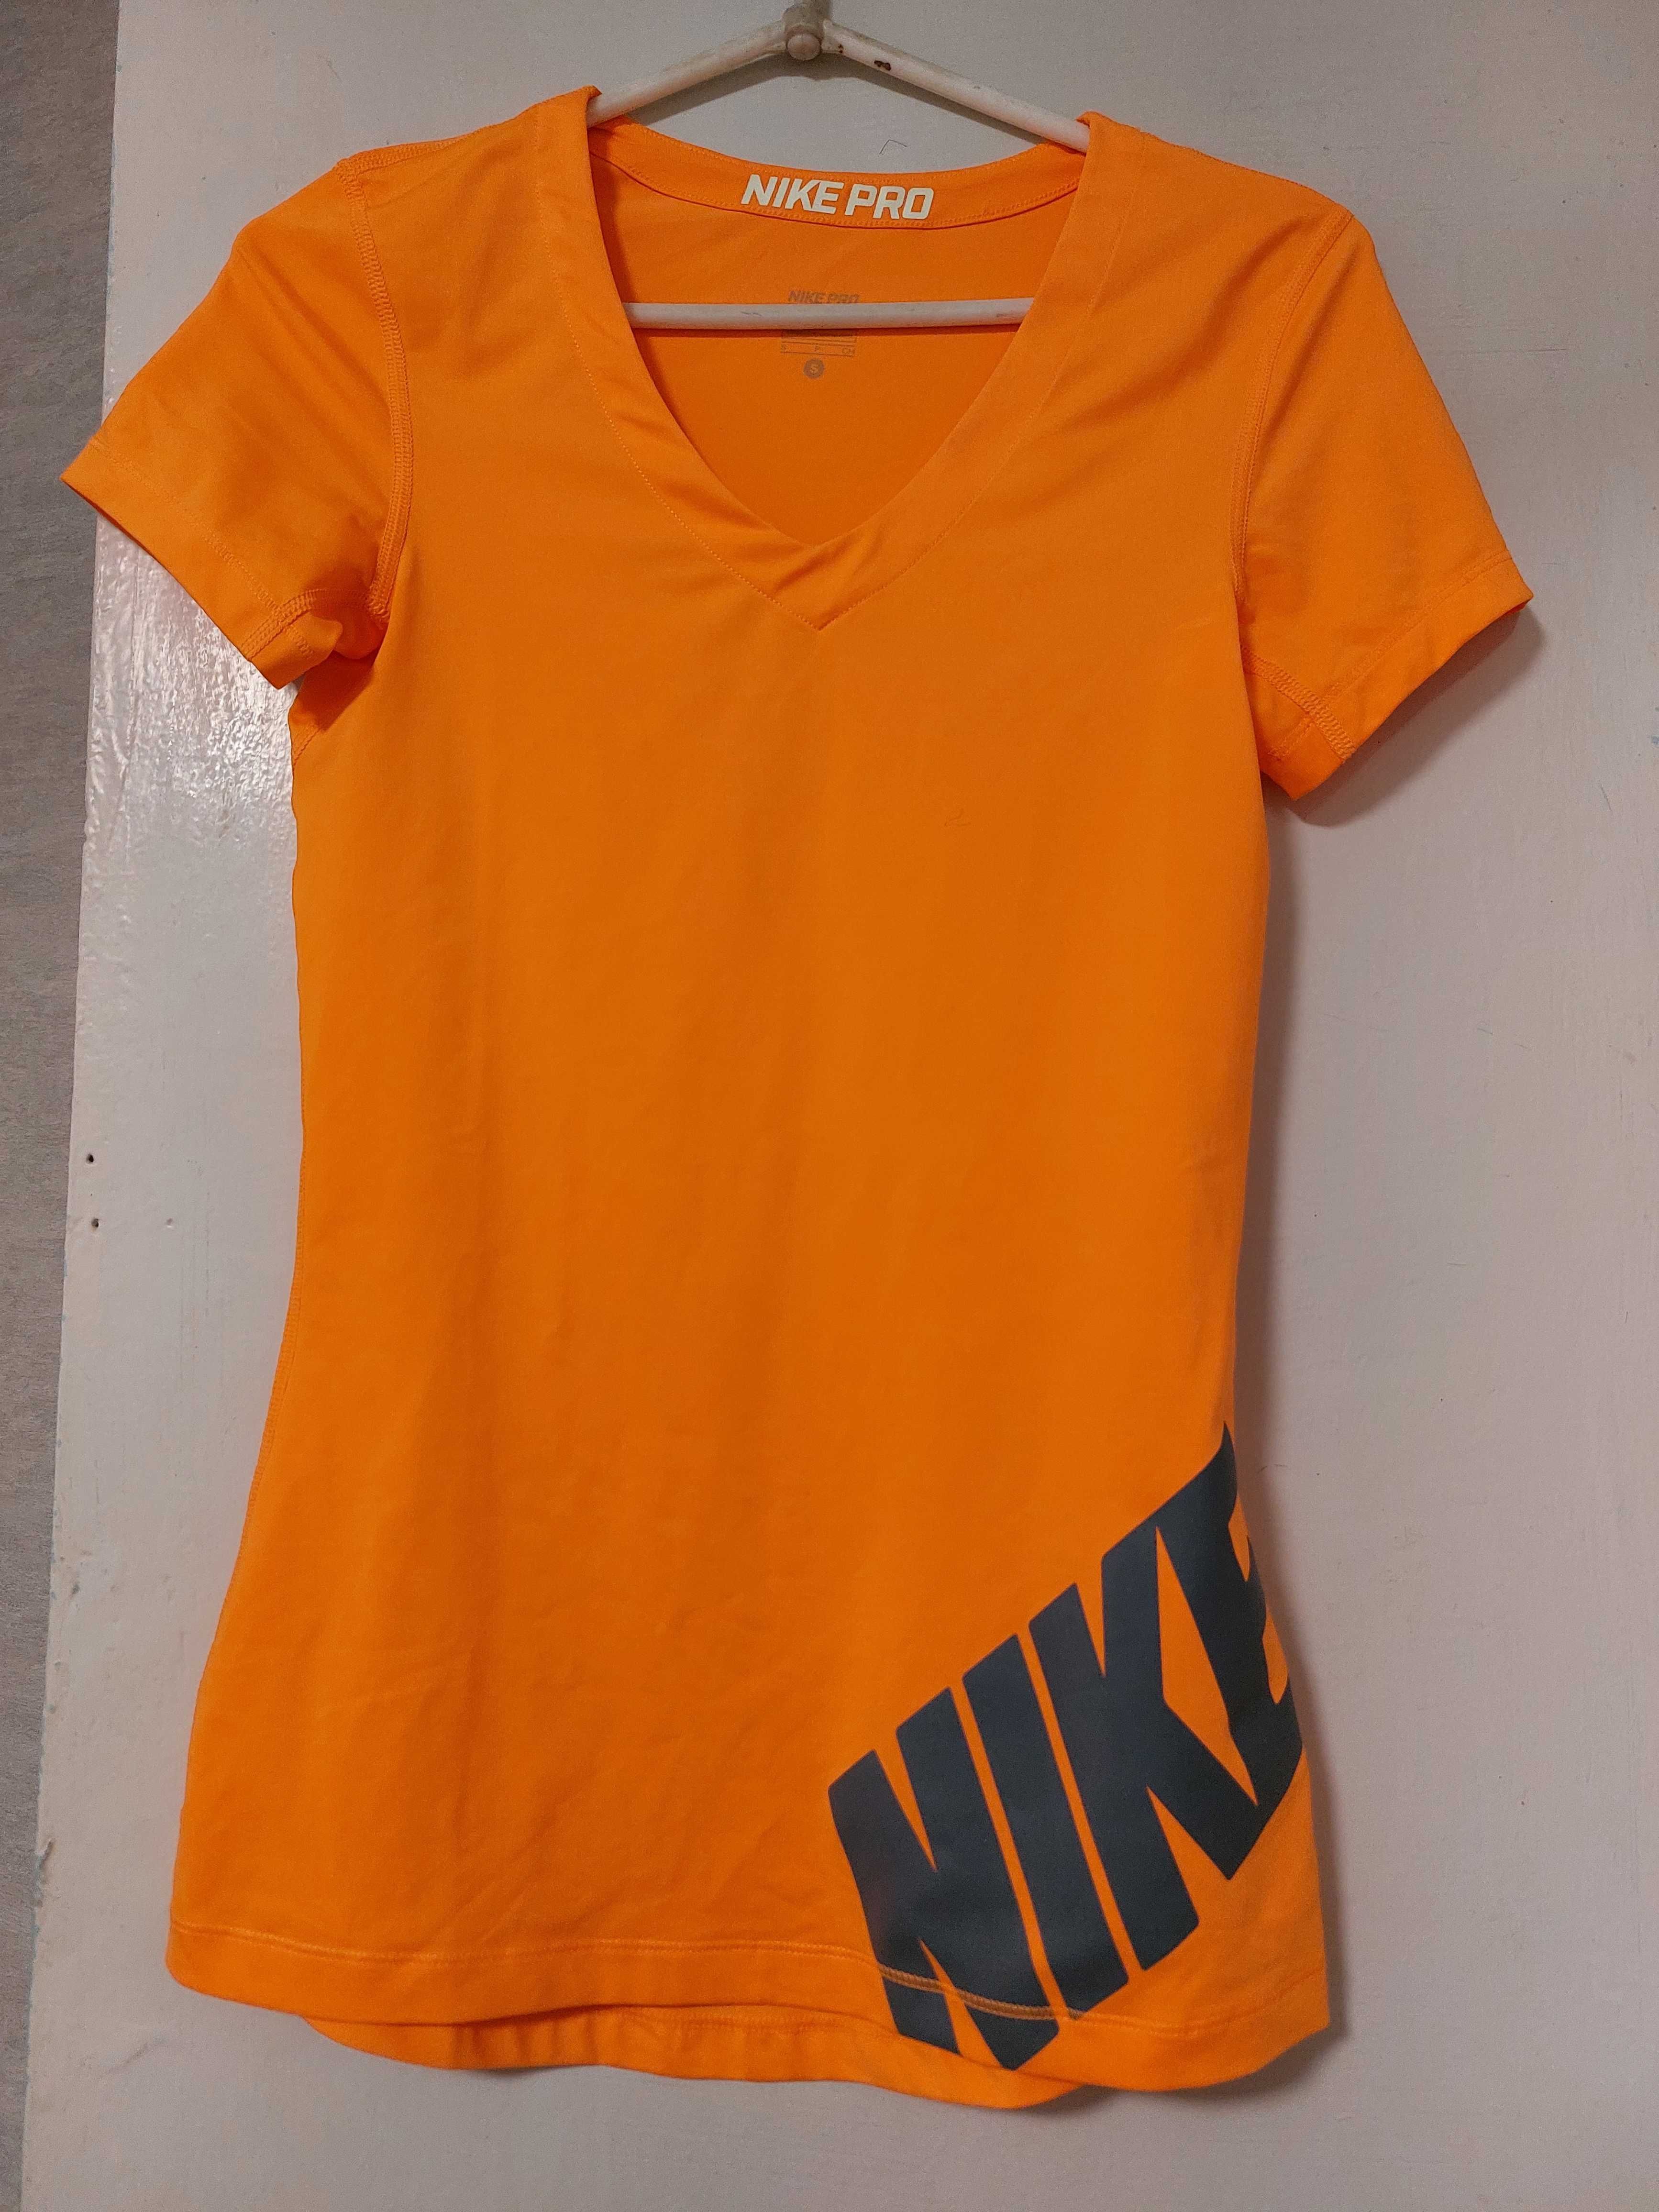 Женская спортивная футболка Nike Pro размер S